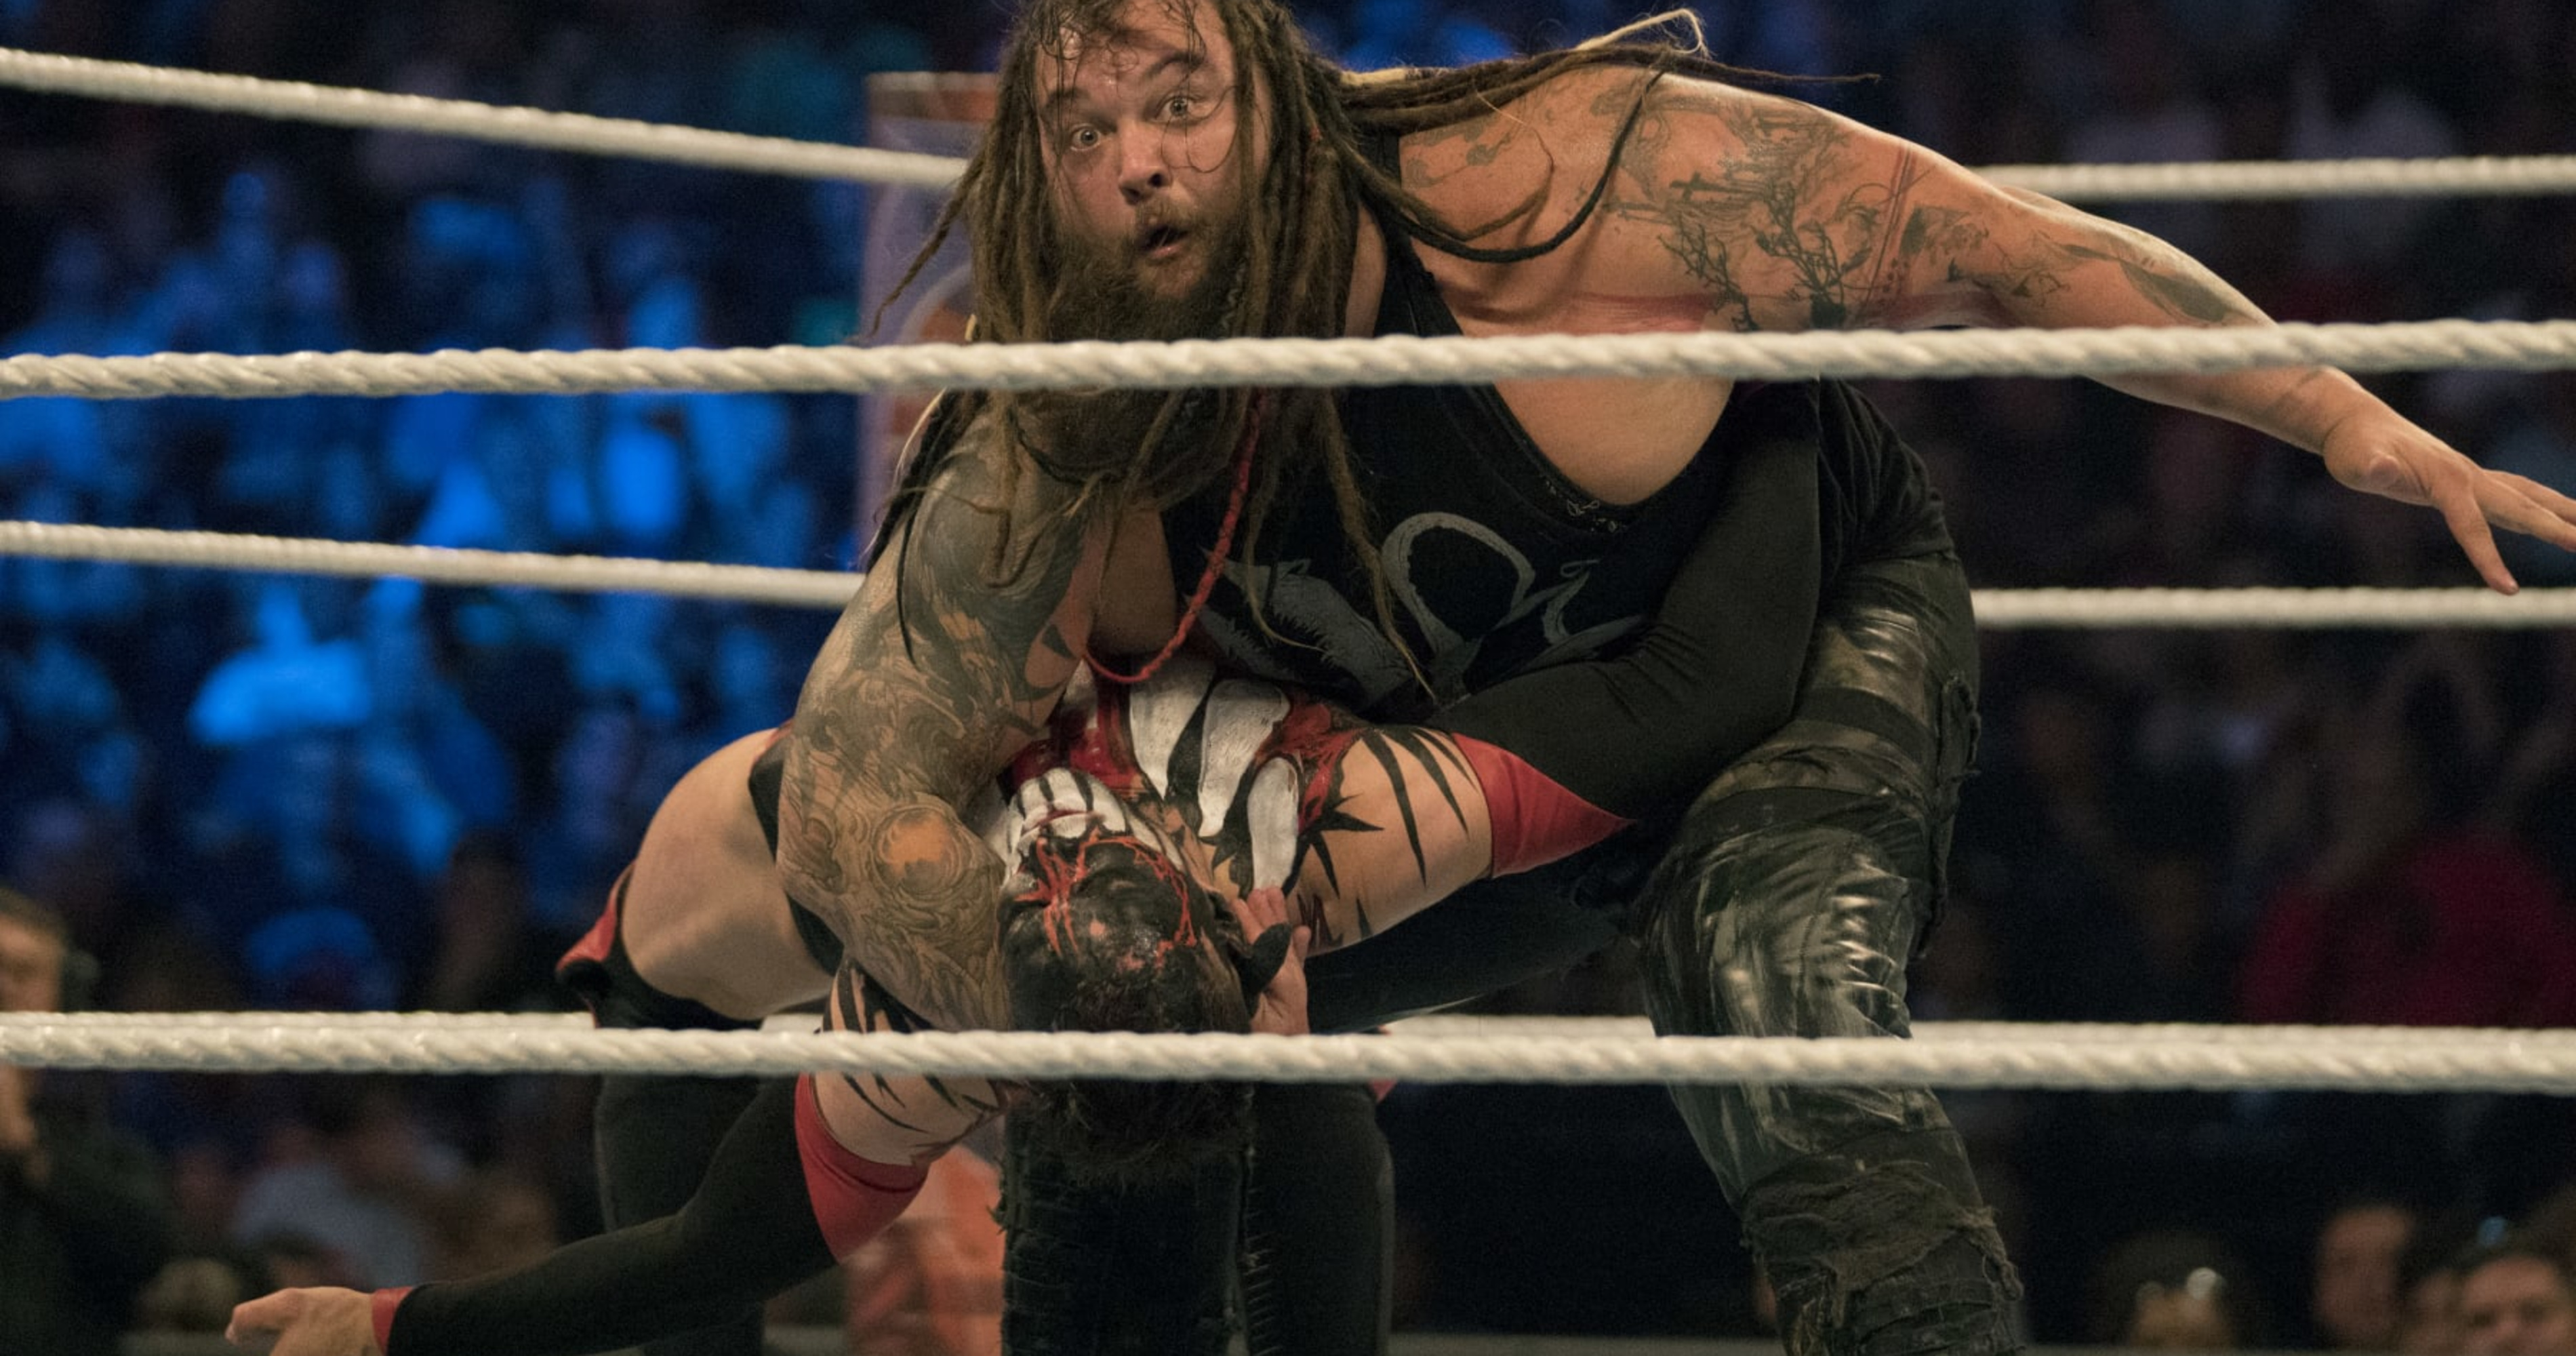 Segment Removed From SmackDown After Bray Wyatt's Death - WrestleTalk